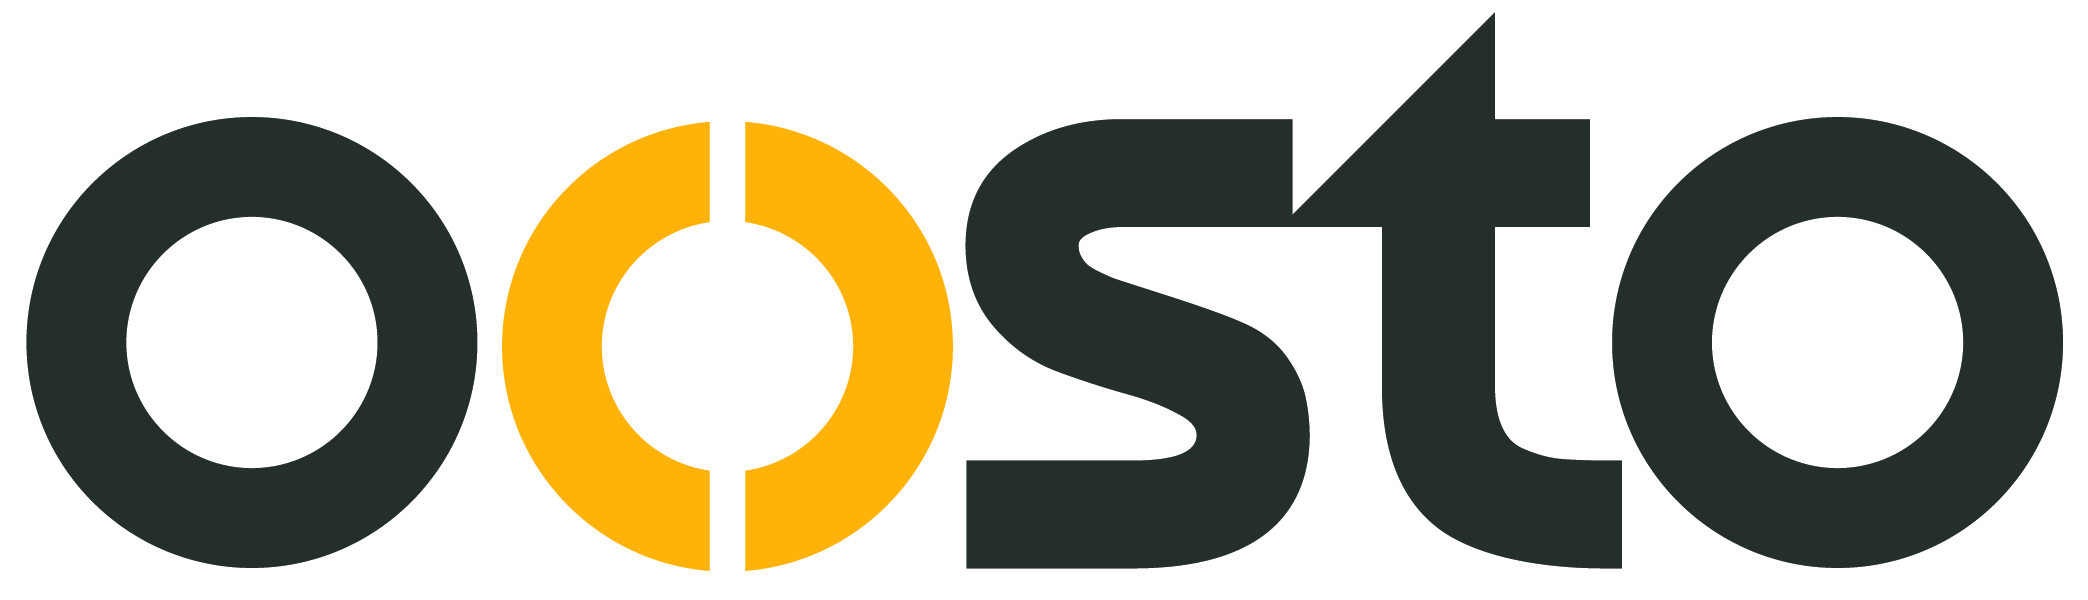 Oosto Logo CMYK-01